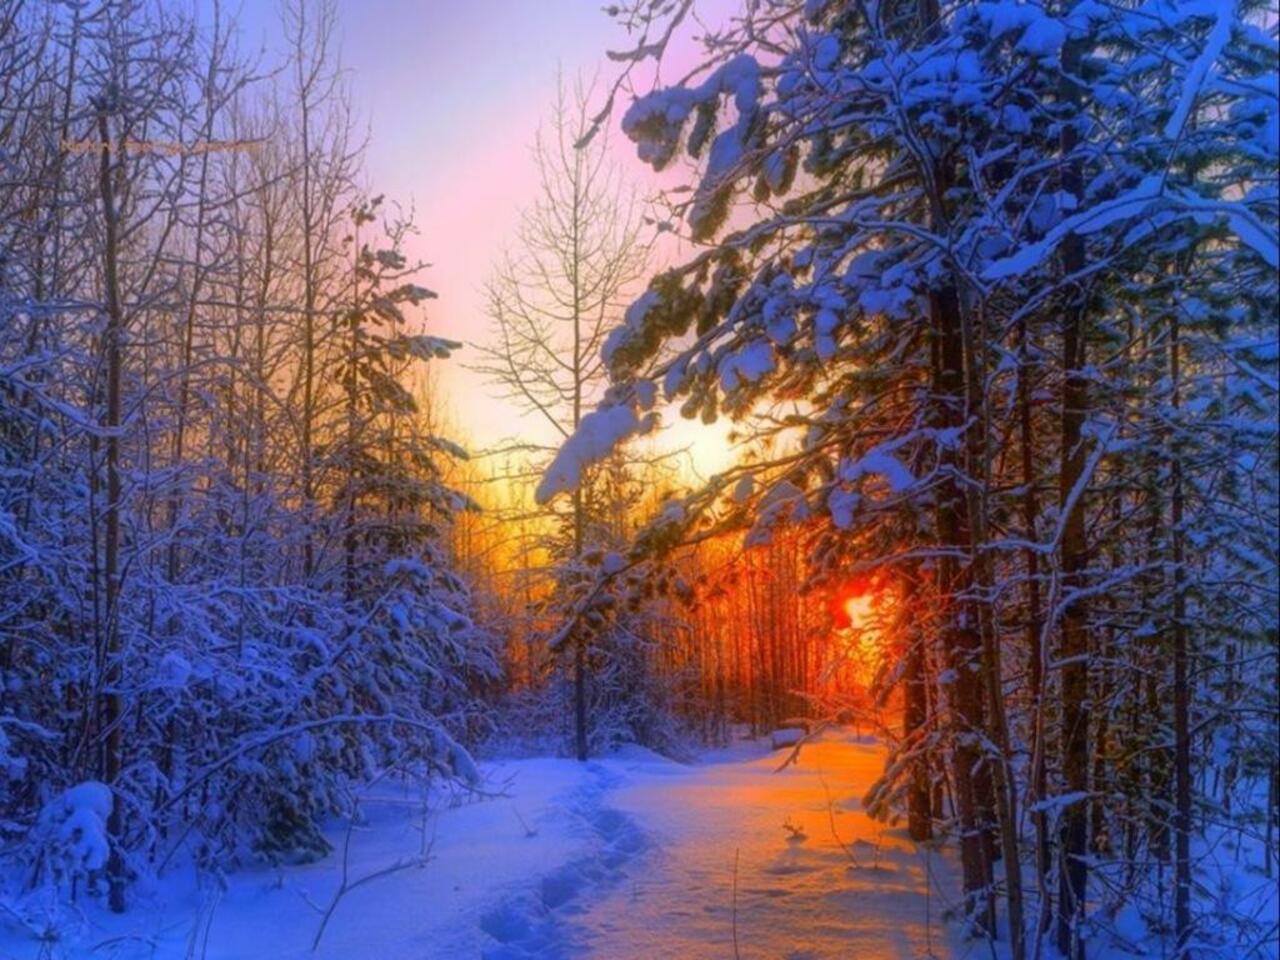 Sunset, winter, landscape - #photo #art #artwit #twitart #iloveart #sunset #forest #fineart #nature #followart ___ http://t.co/5CoxWTNDoY